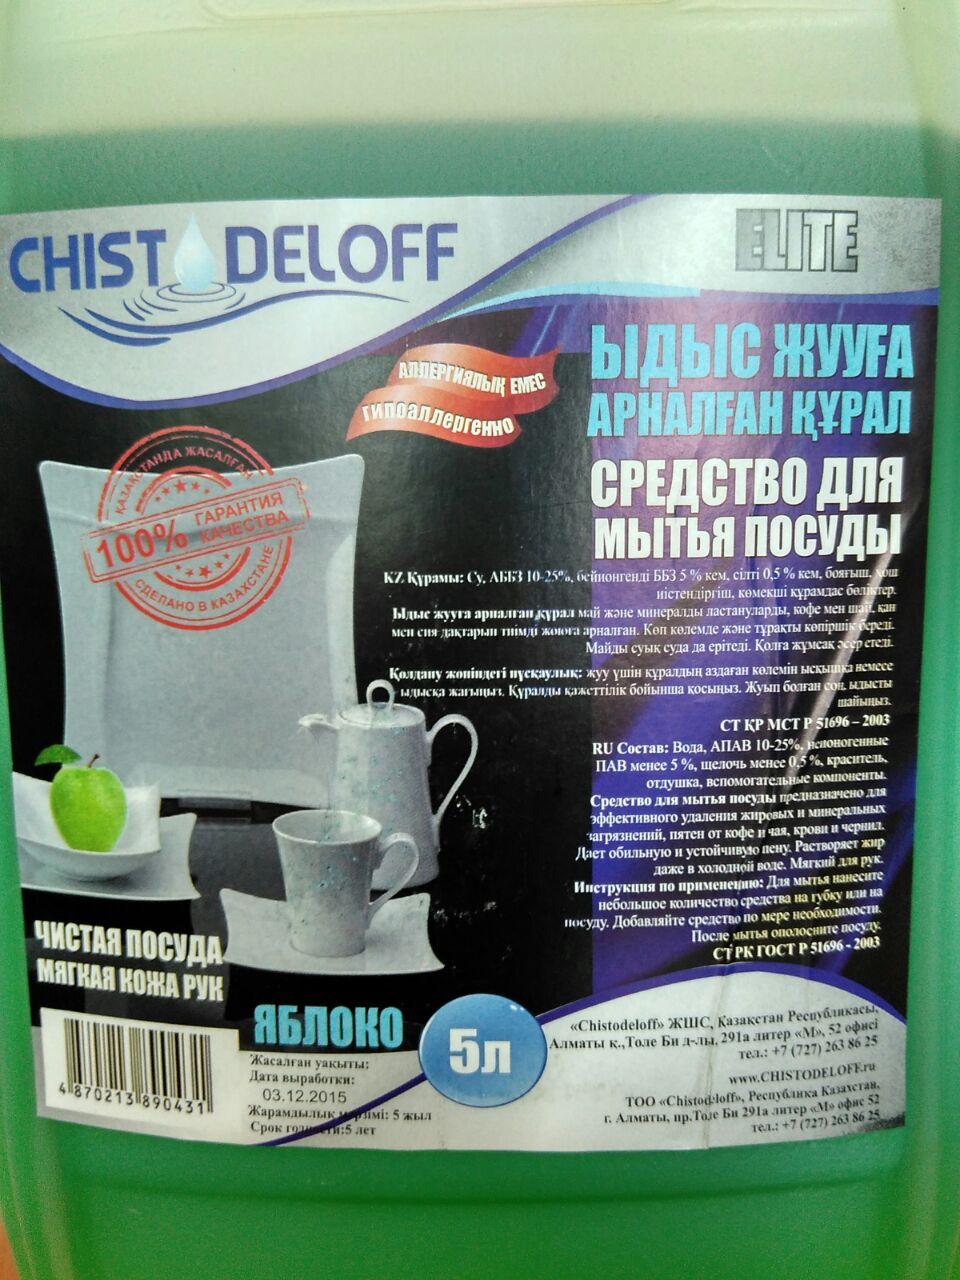 Средство для мытья посуды CHISTODELOFF Elite 5 л.